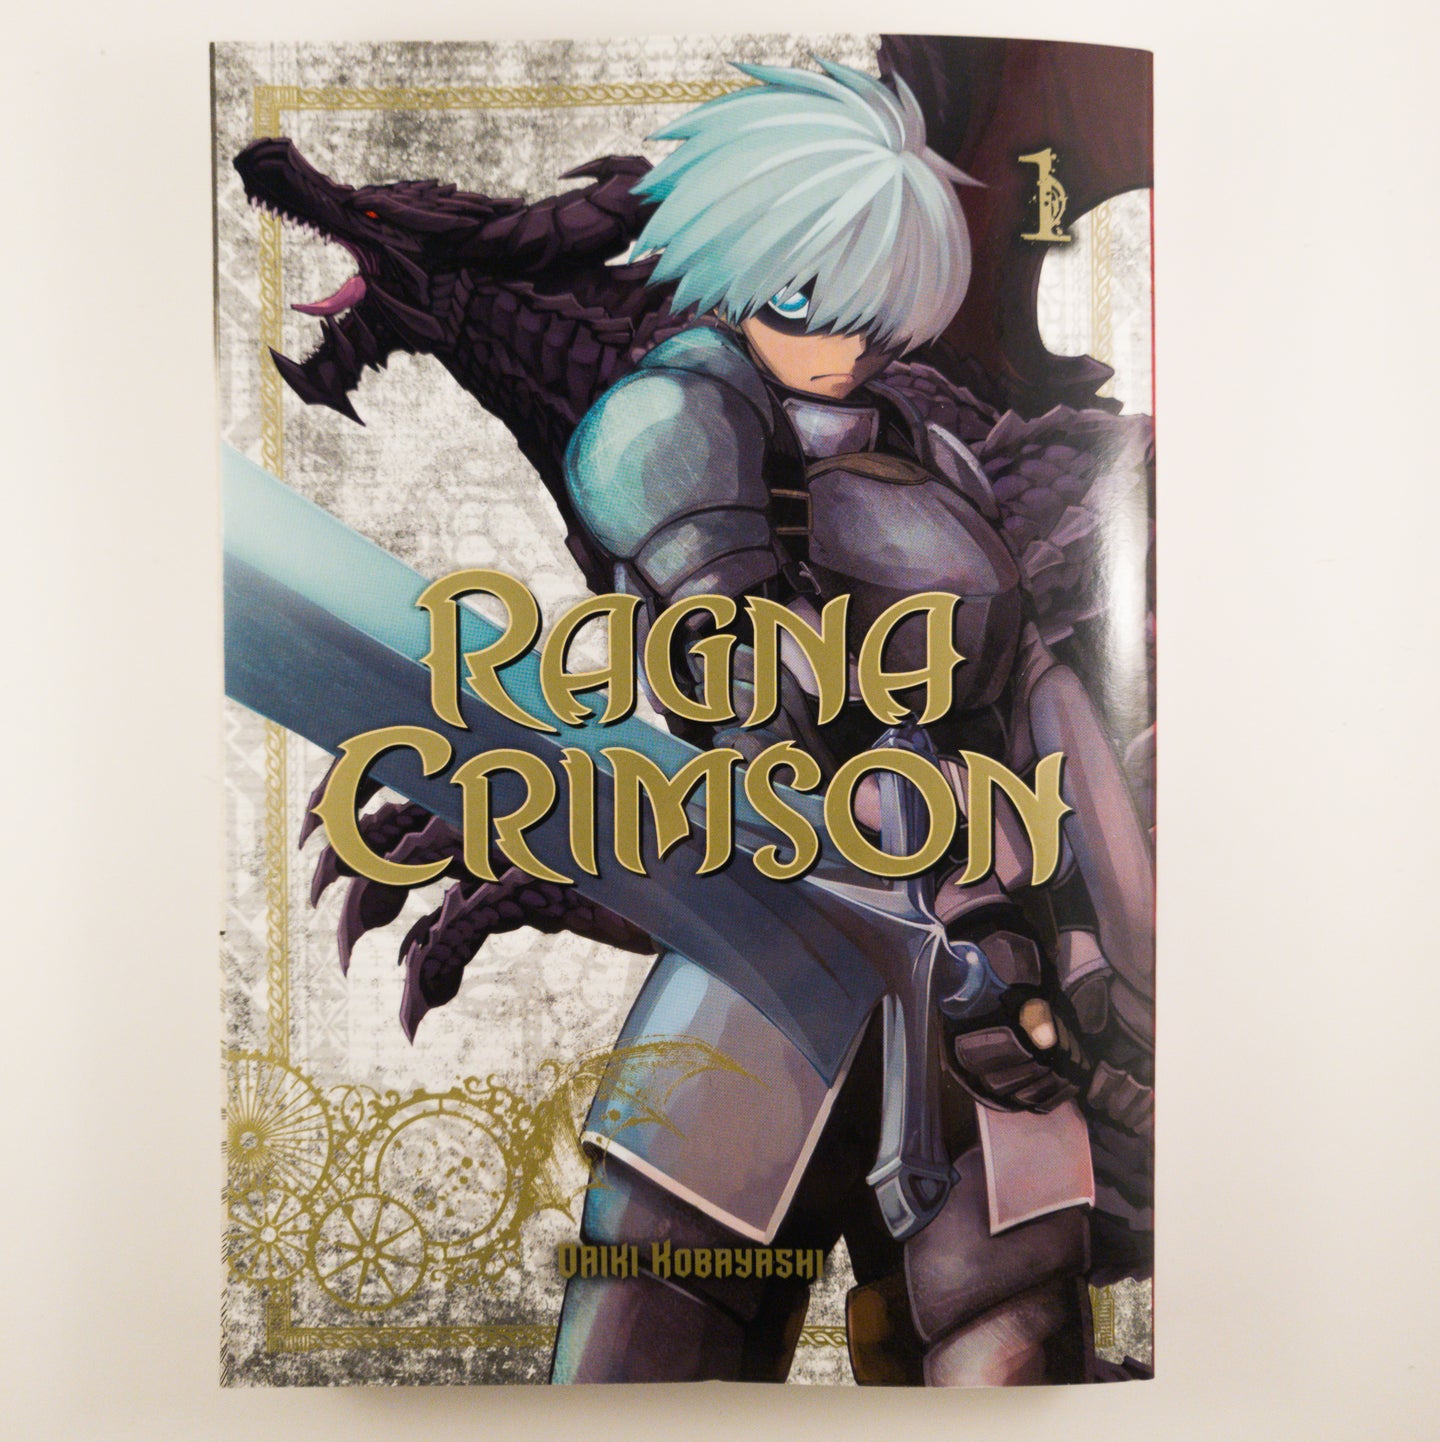 Ragna Crimson Volume 1. Manga by Oriki Kobayashi.